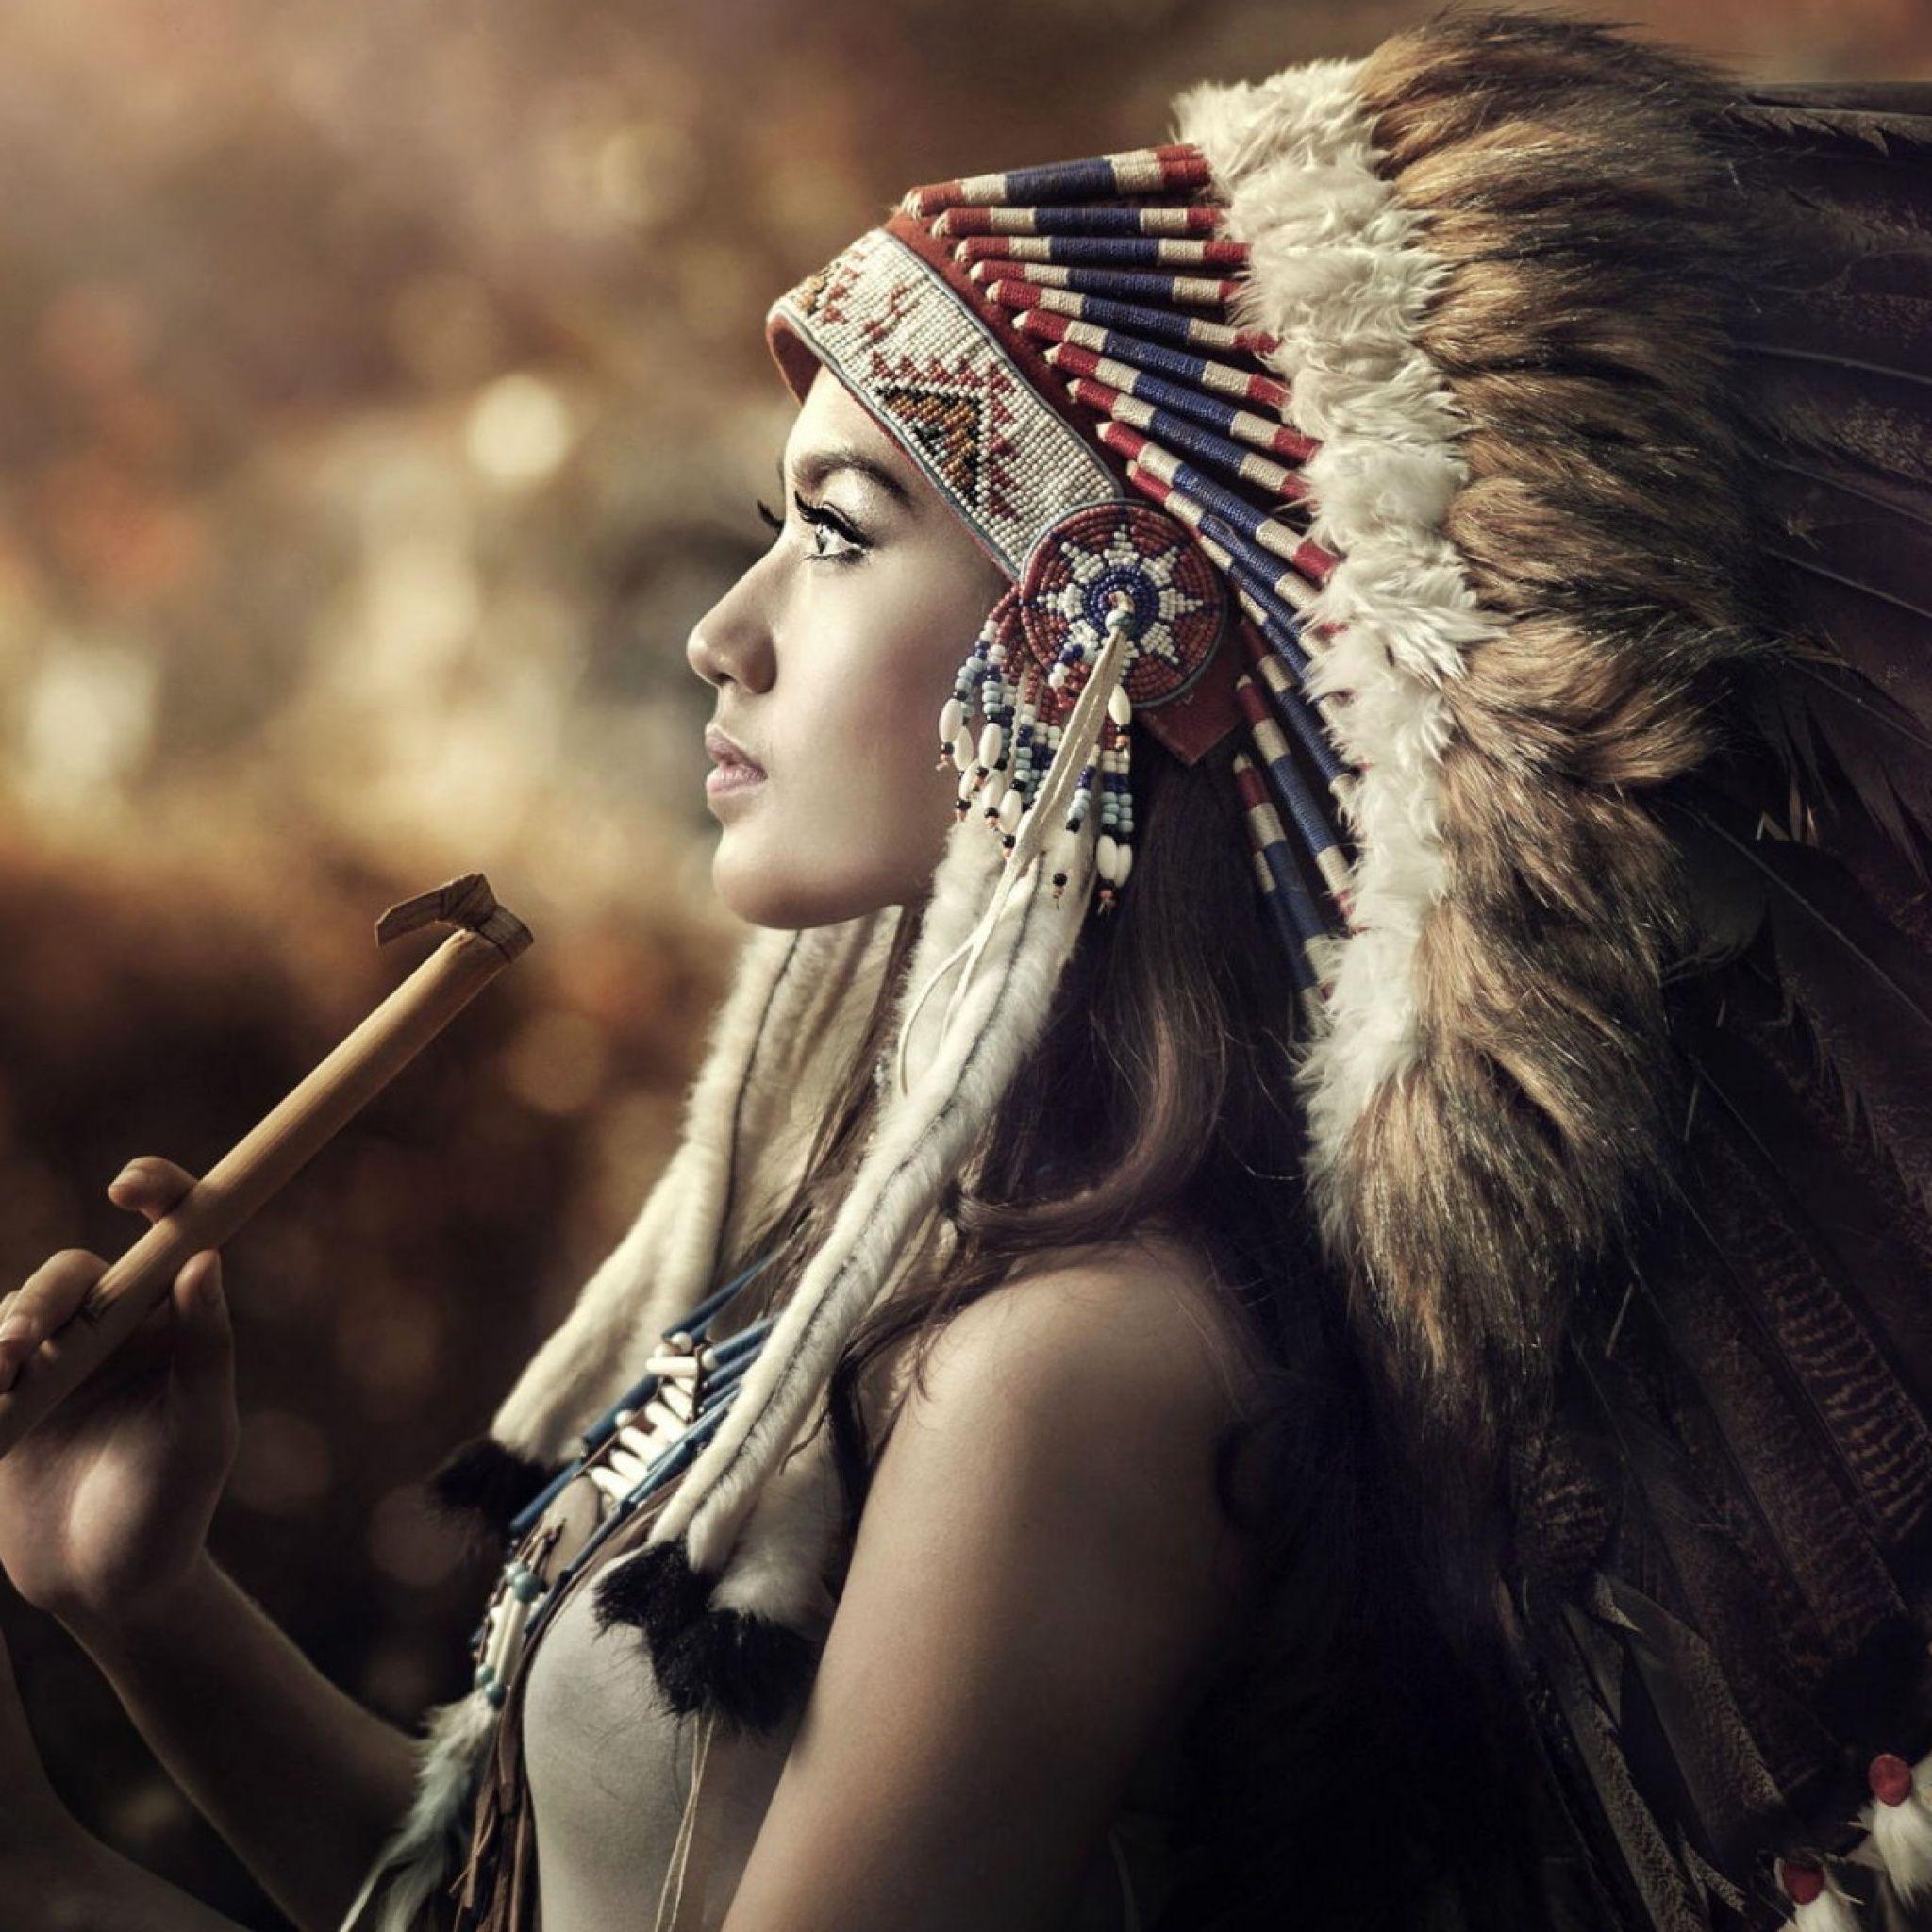 Native American Girl iPad Air wallpaper. Native American Beauty